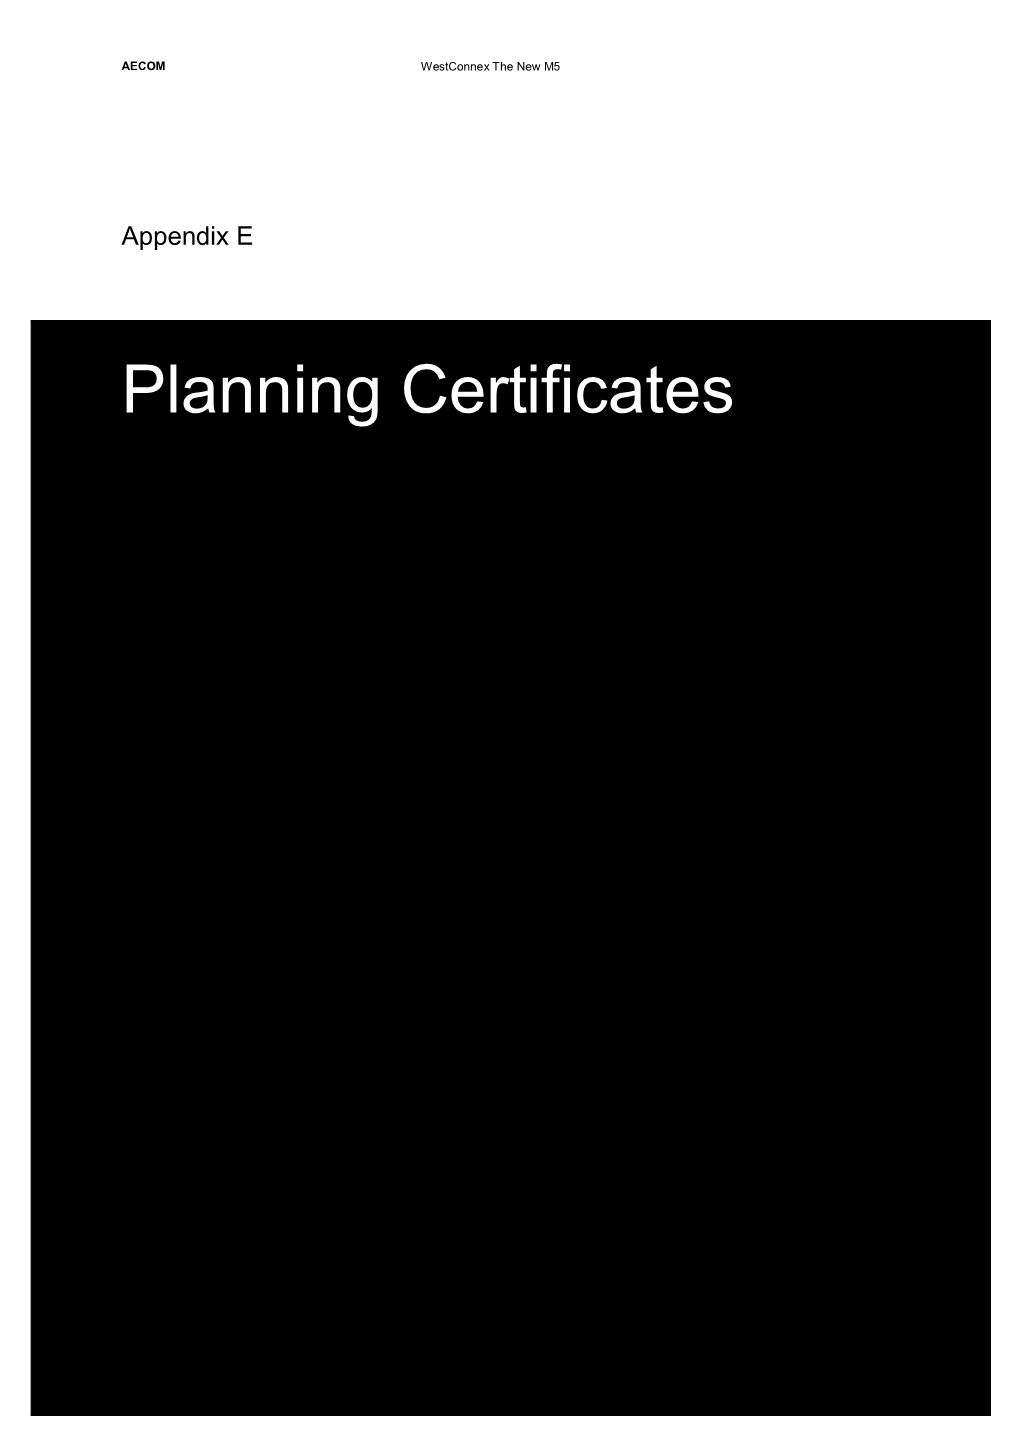 Planning Certificates